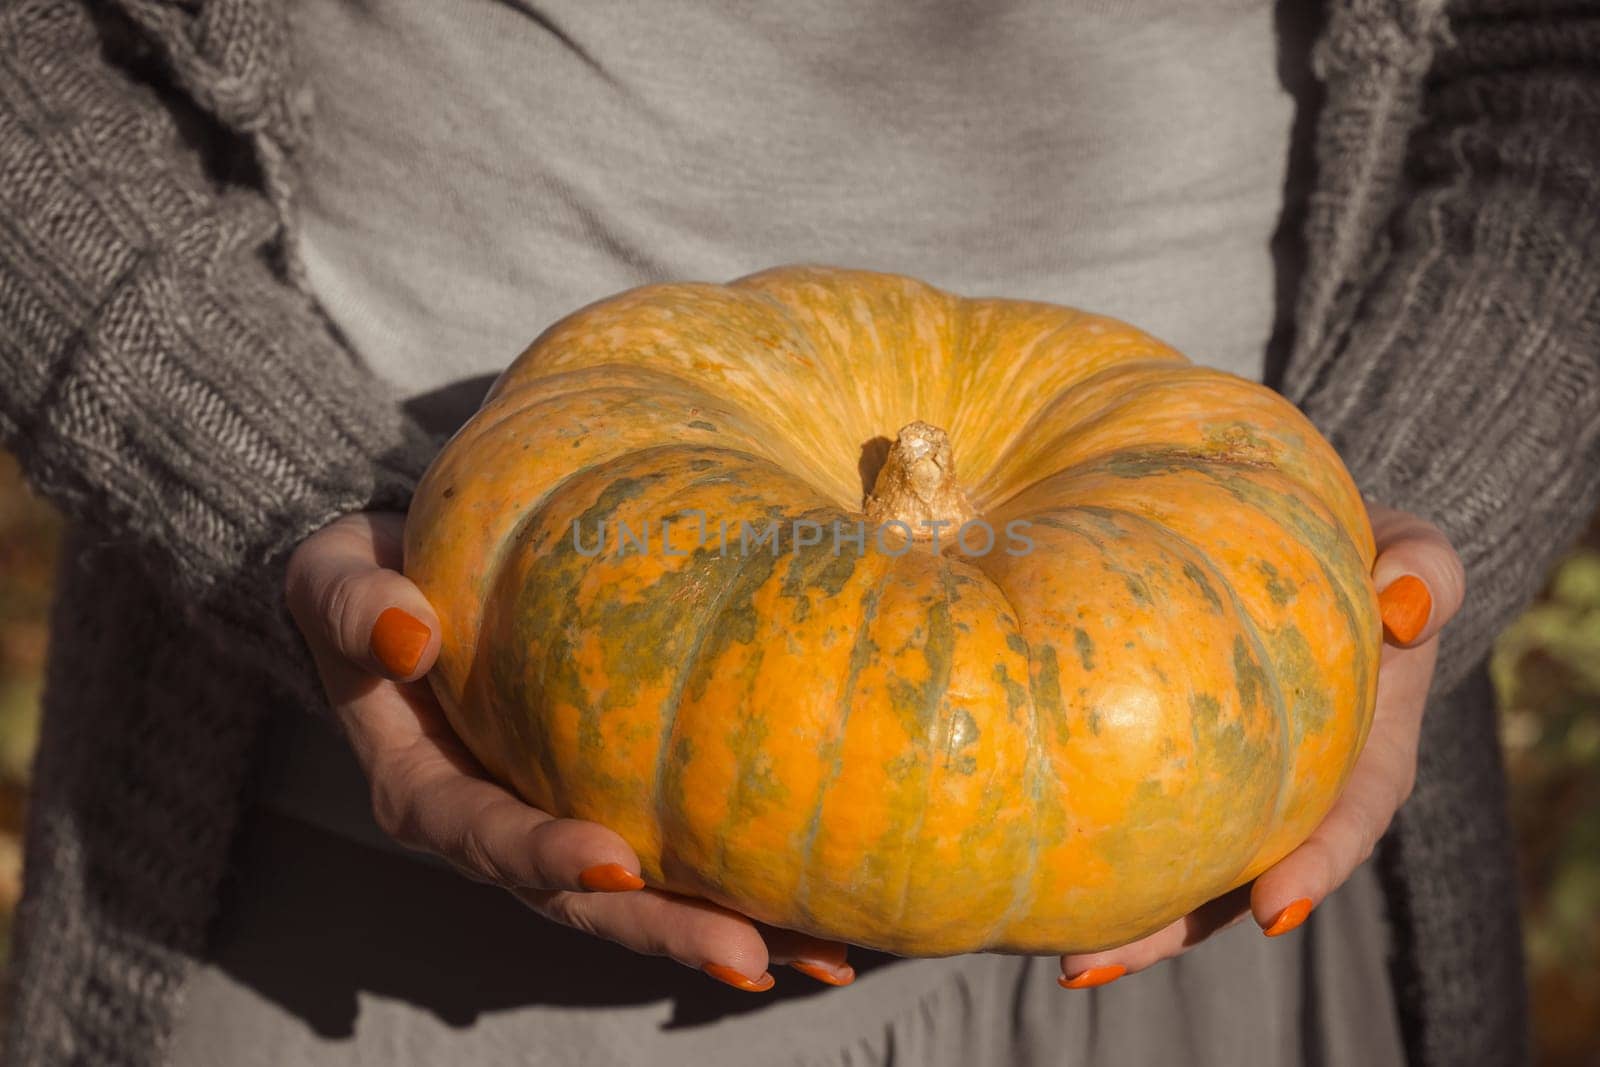 A woman gives a ripe orange round pumpkin